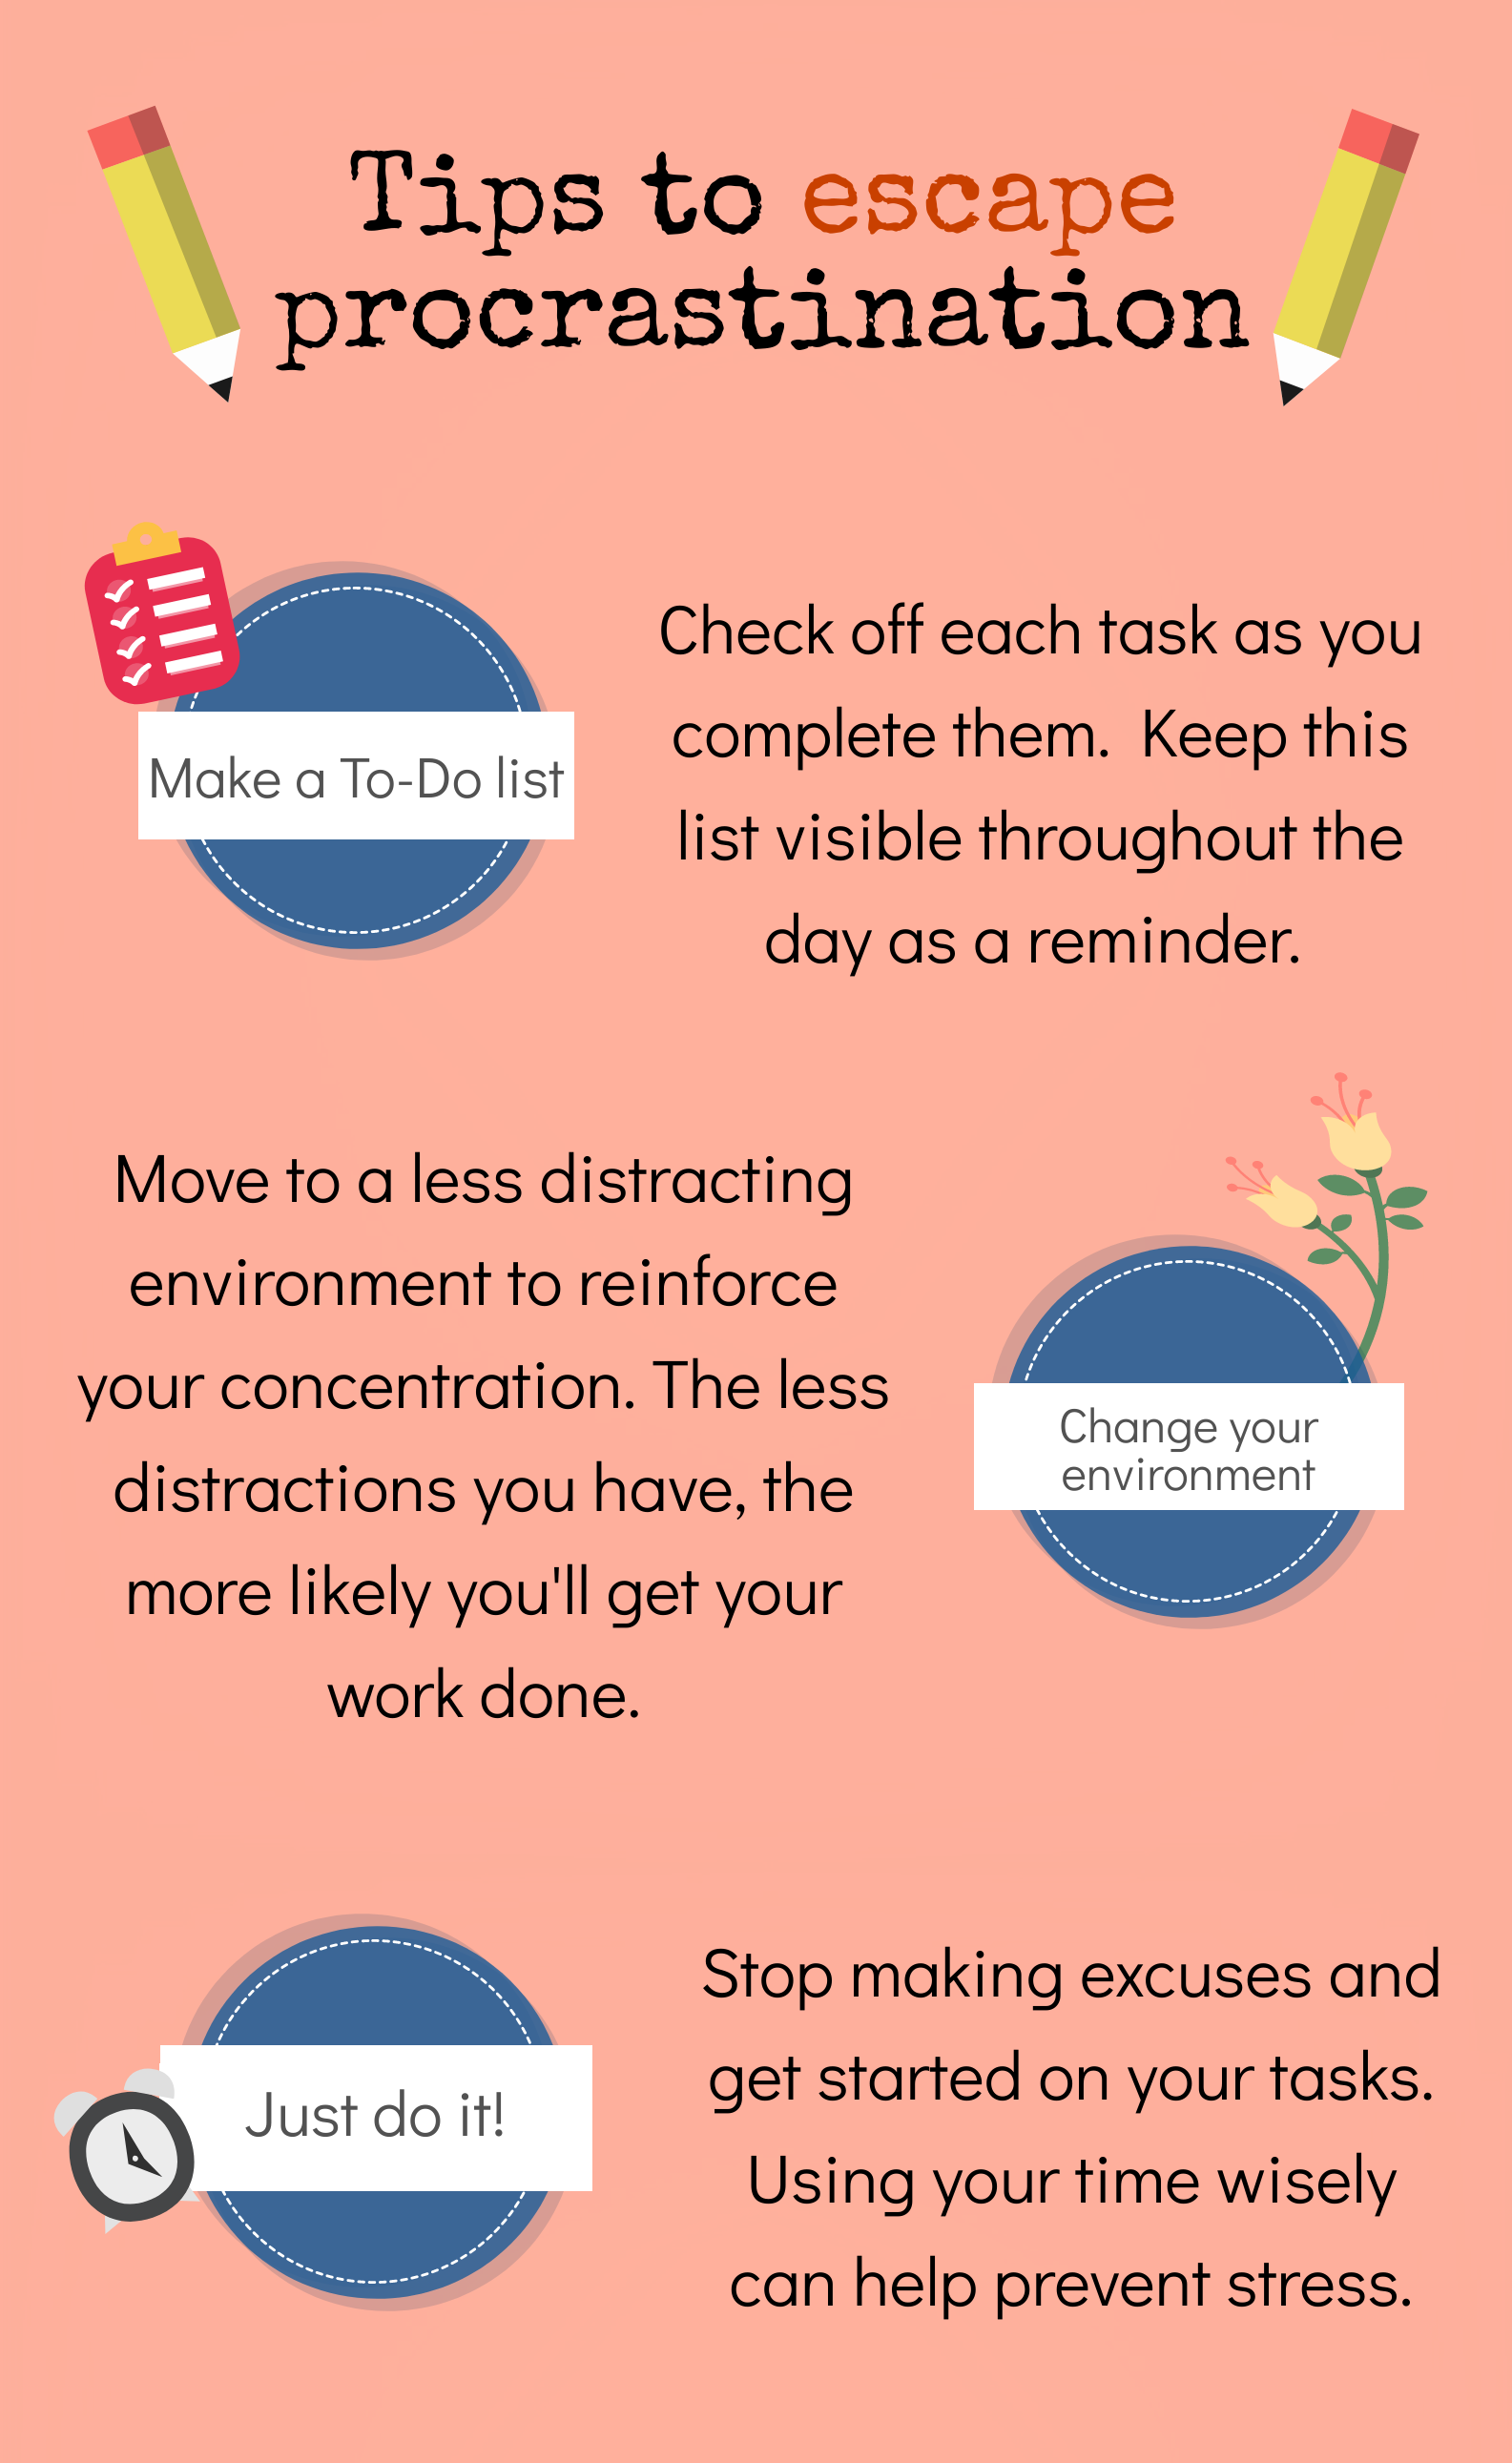 Tips to escape procrastination